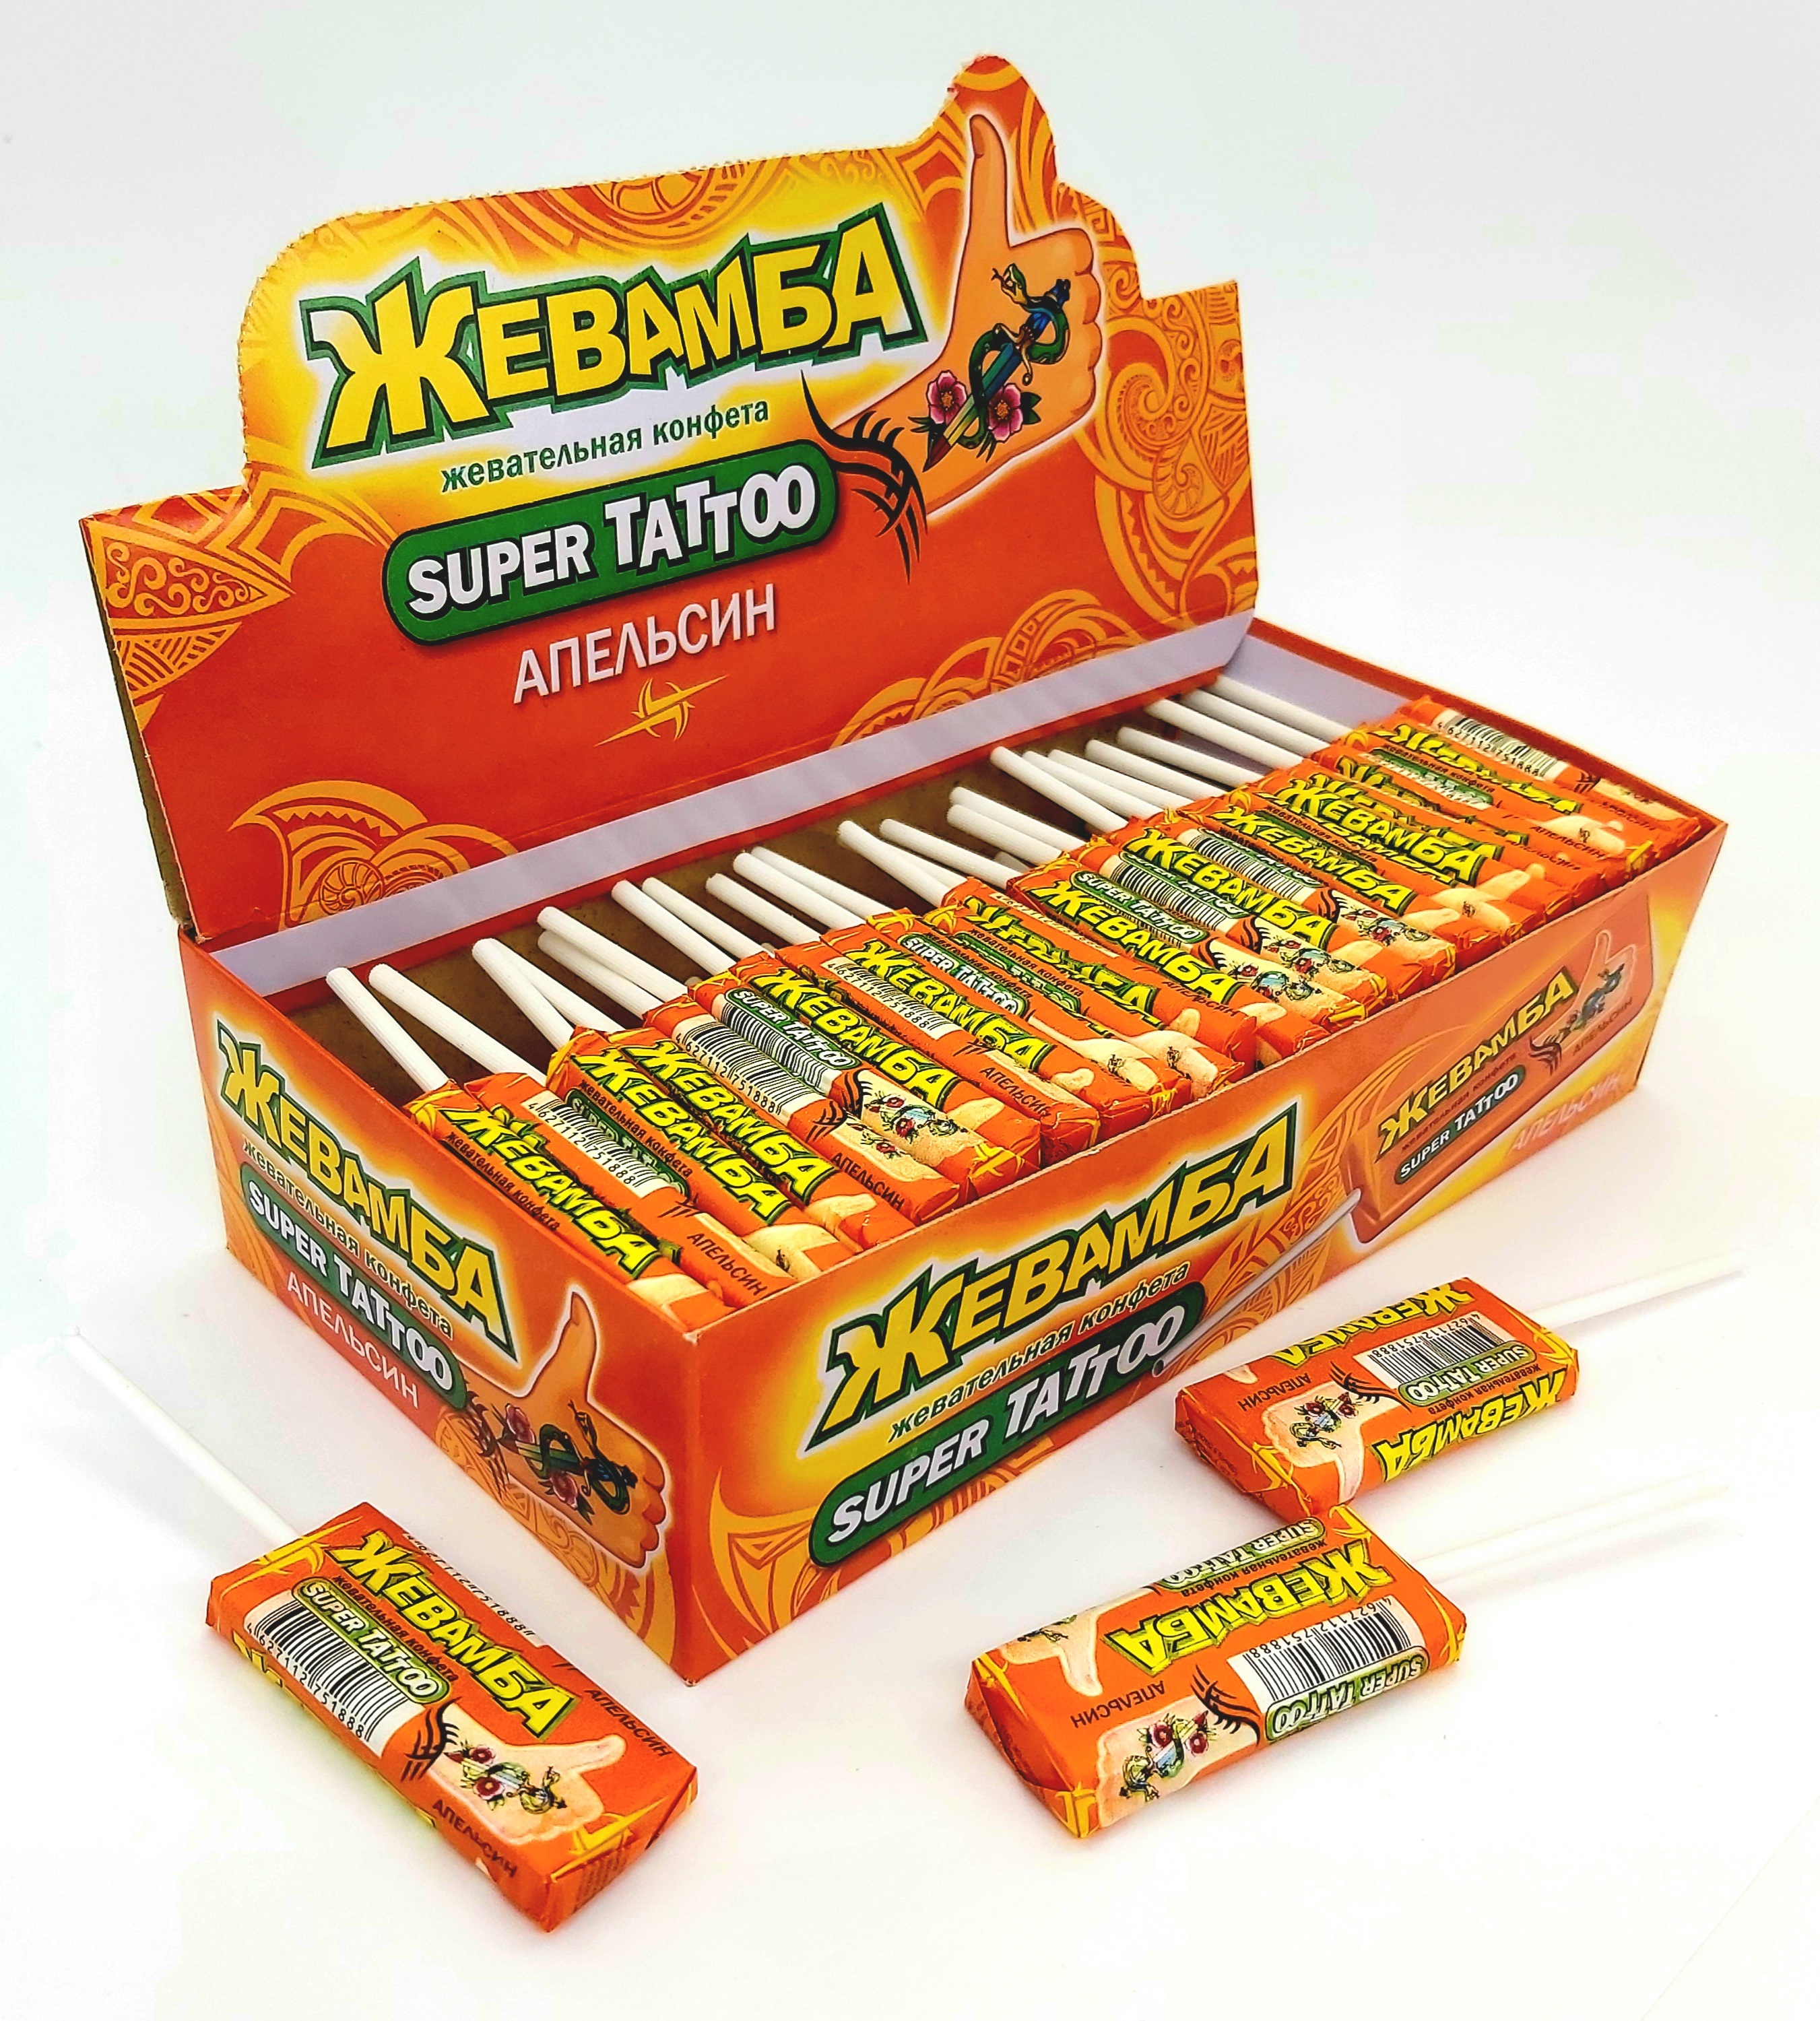 Жевательная конфета "Жевамба" Super Tattoo Апельсин 10г/50шт/Candy Club